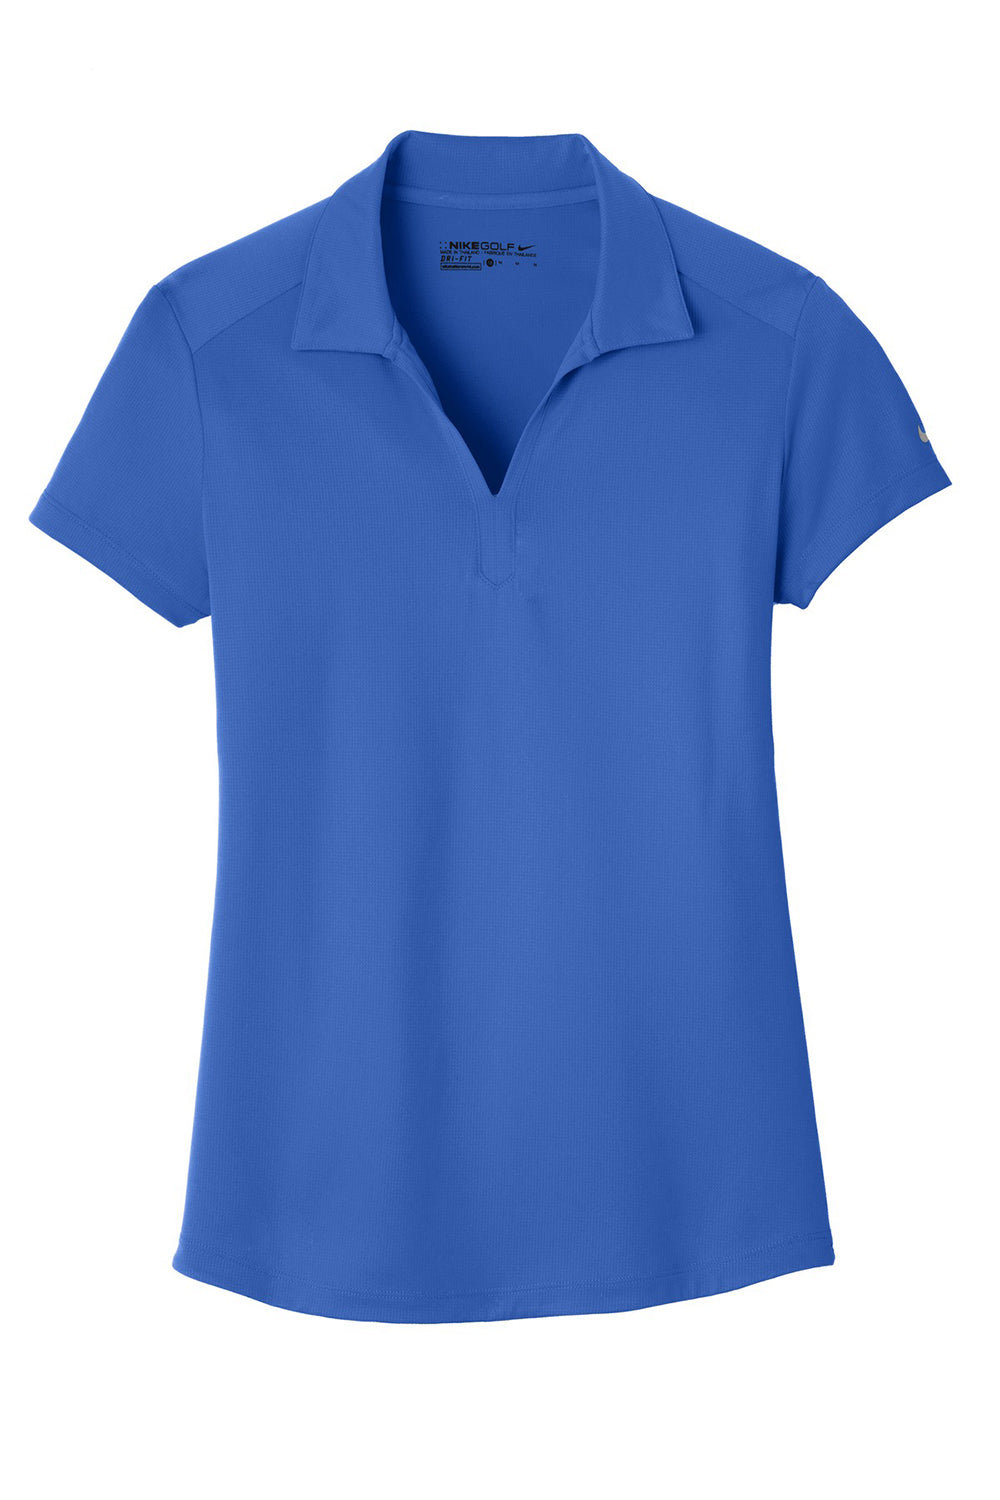 Nike 838957 Womens Legacy Dri-Fit Moisture Wicking Short Sleeve Polo Shirt Game Royal Blue Flat Front